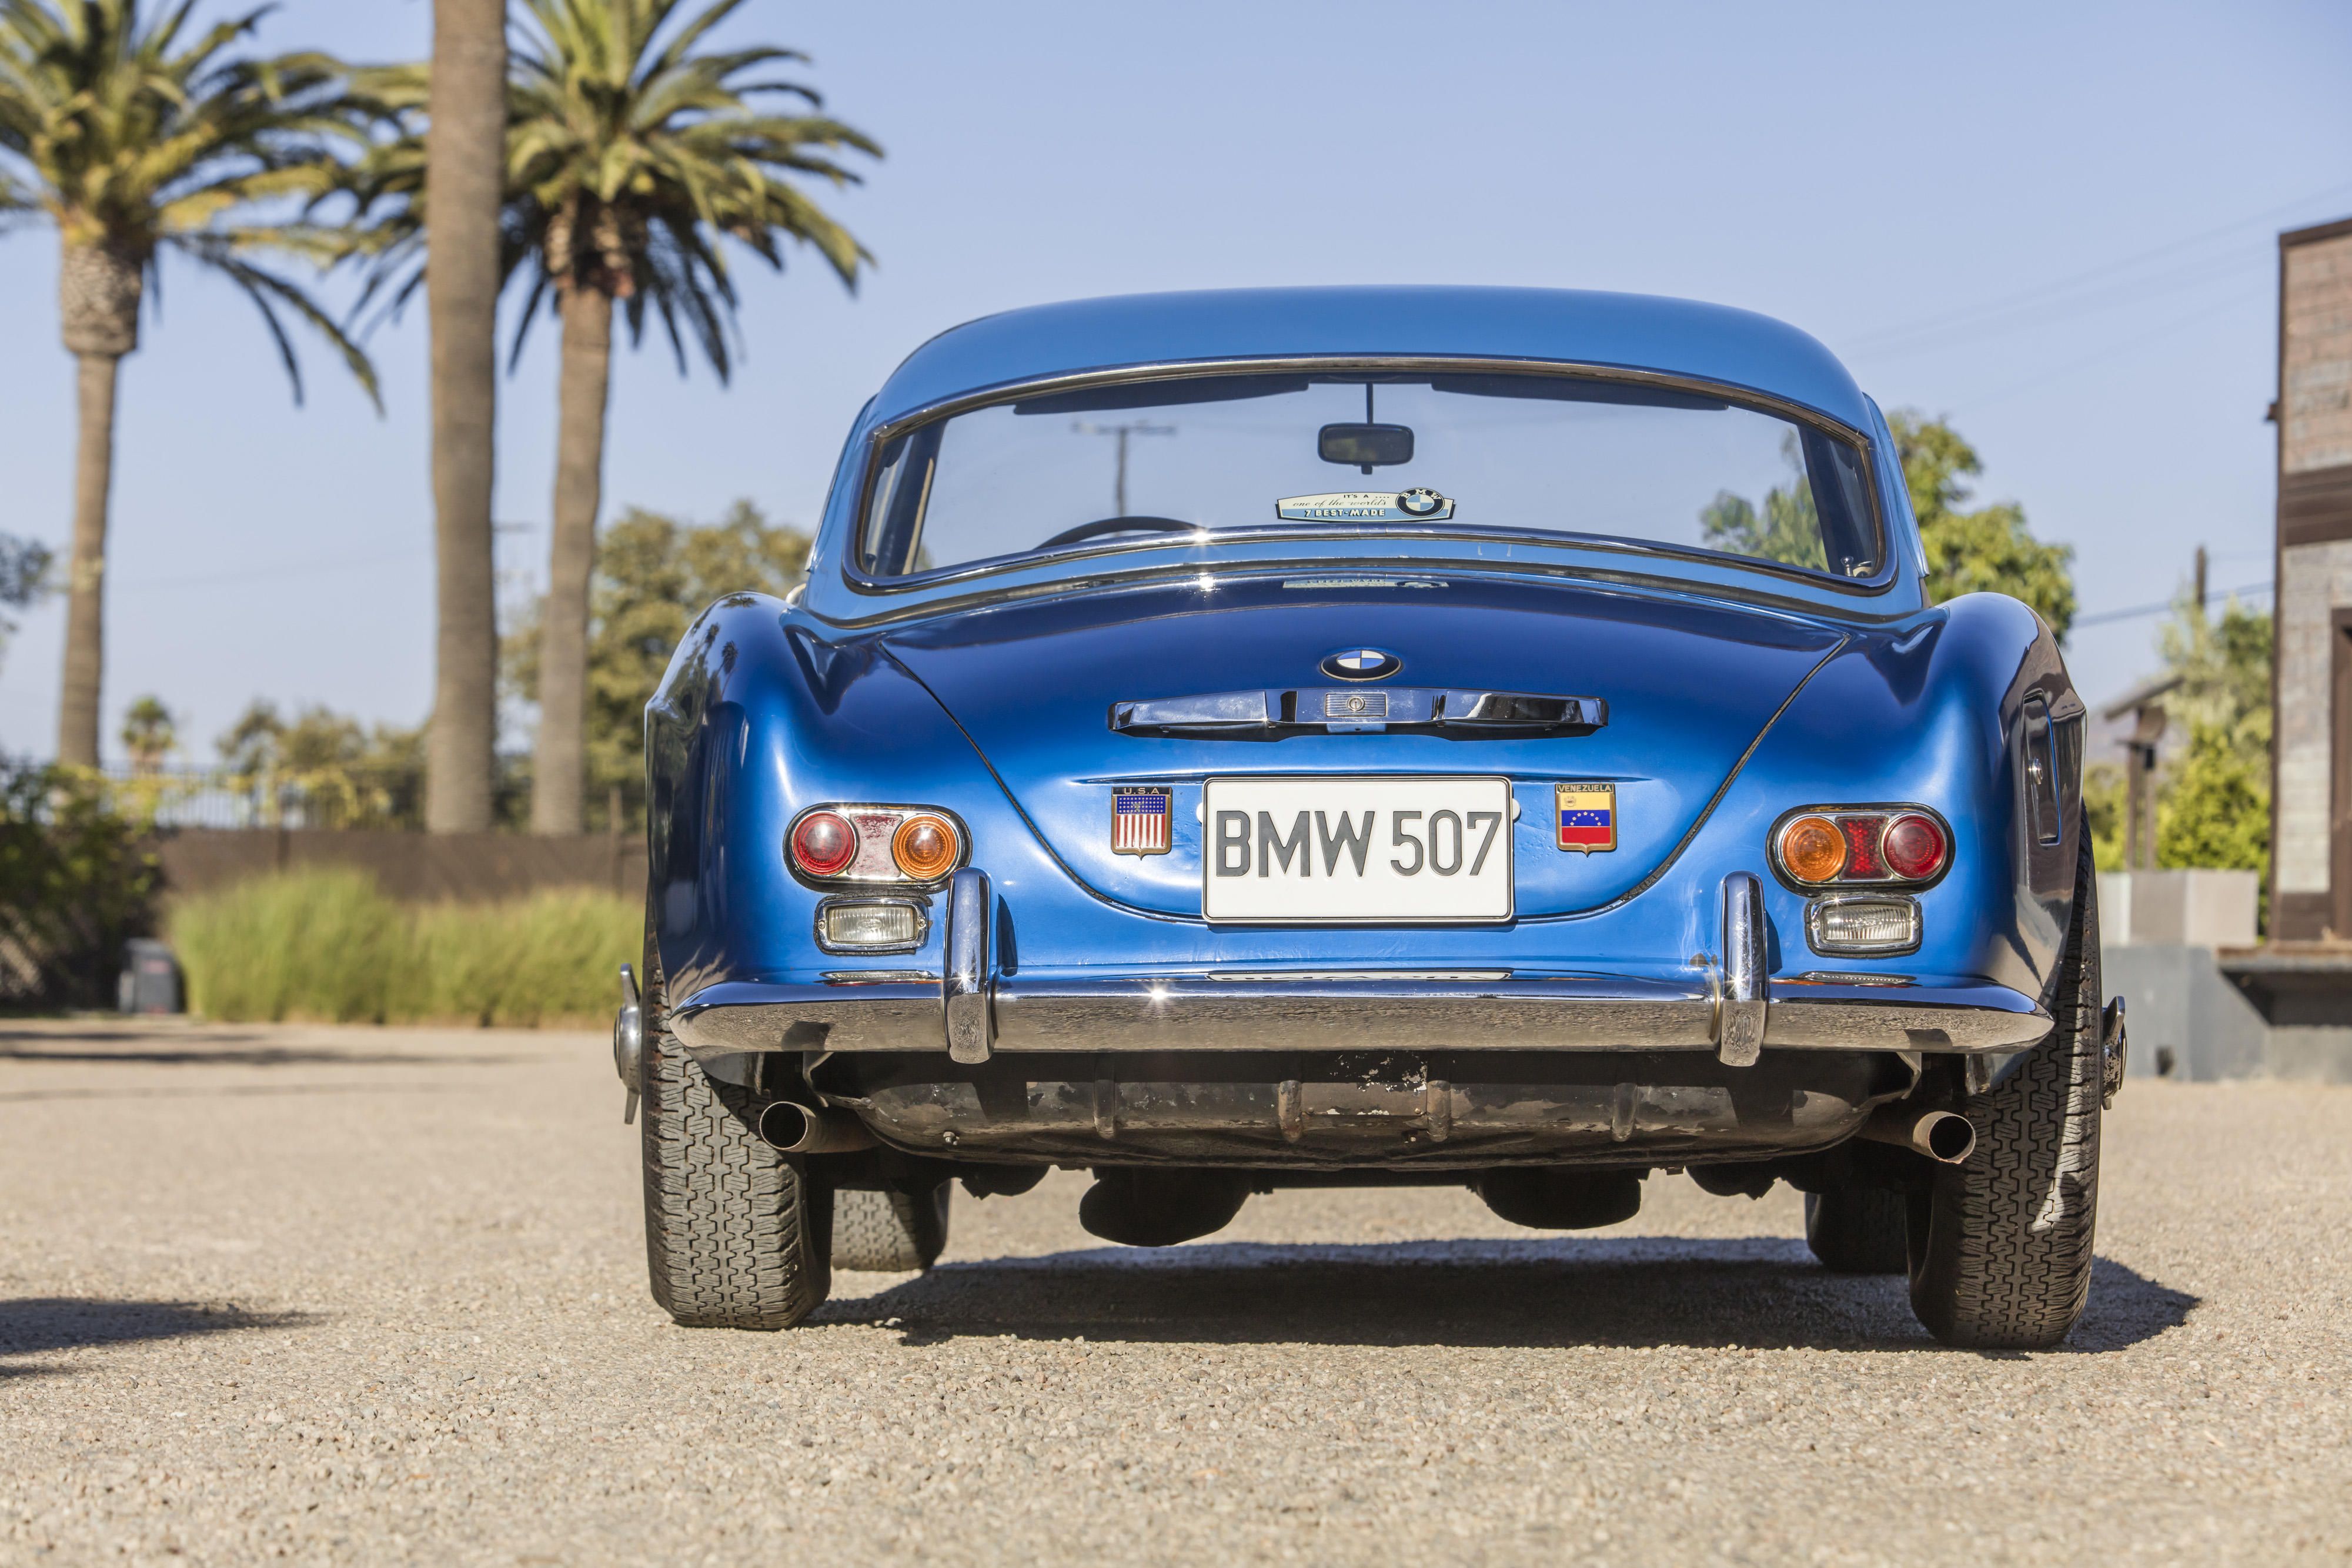 BMW 507 II Roadster Bonhams Auction, blue, rear profile view